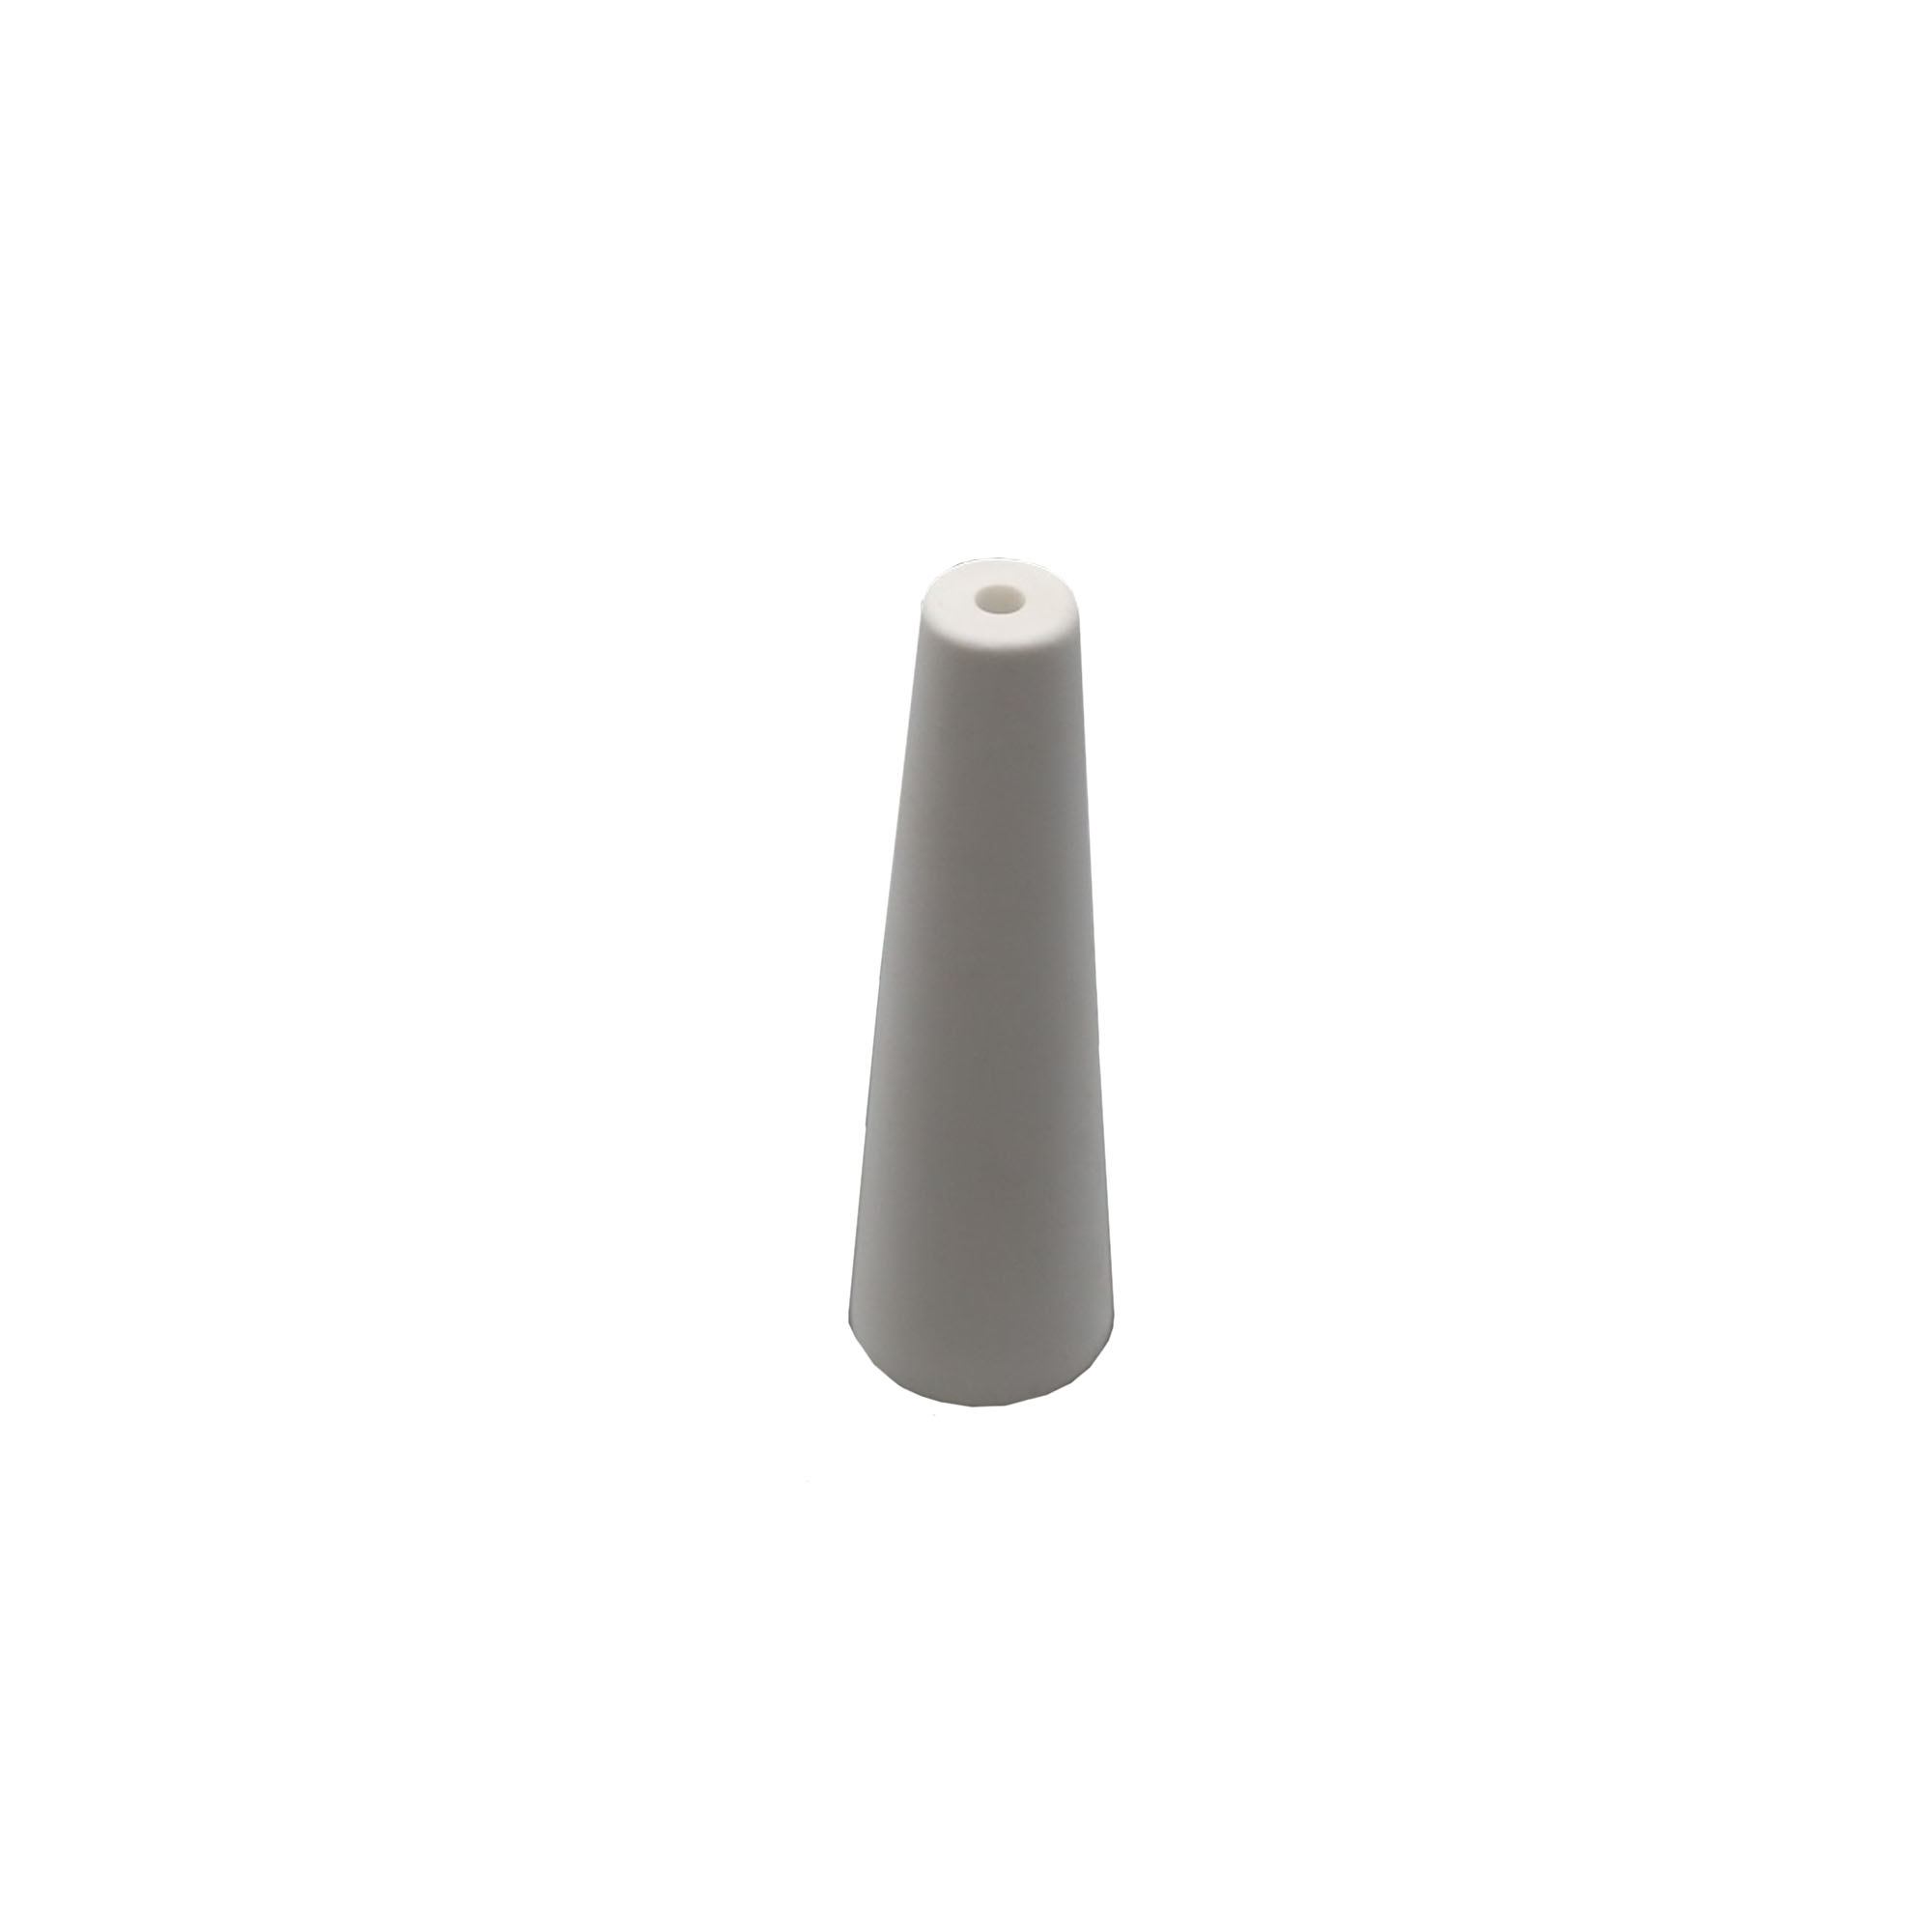 Sandblast Guns & Nozzles, Parts & Accessories, 3/16″ Ceramic Cone Nozzle Compression Fit, 2304 Ceramic Cone Nozzle, American Hawk Industrial, Dee-Blast